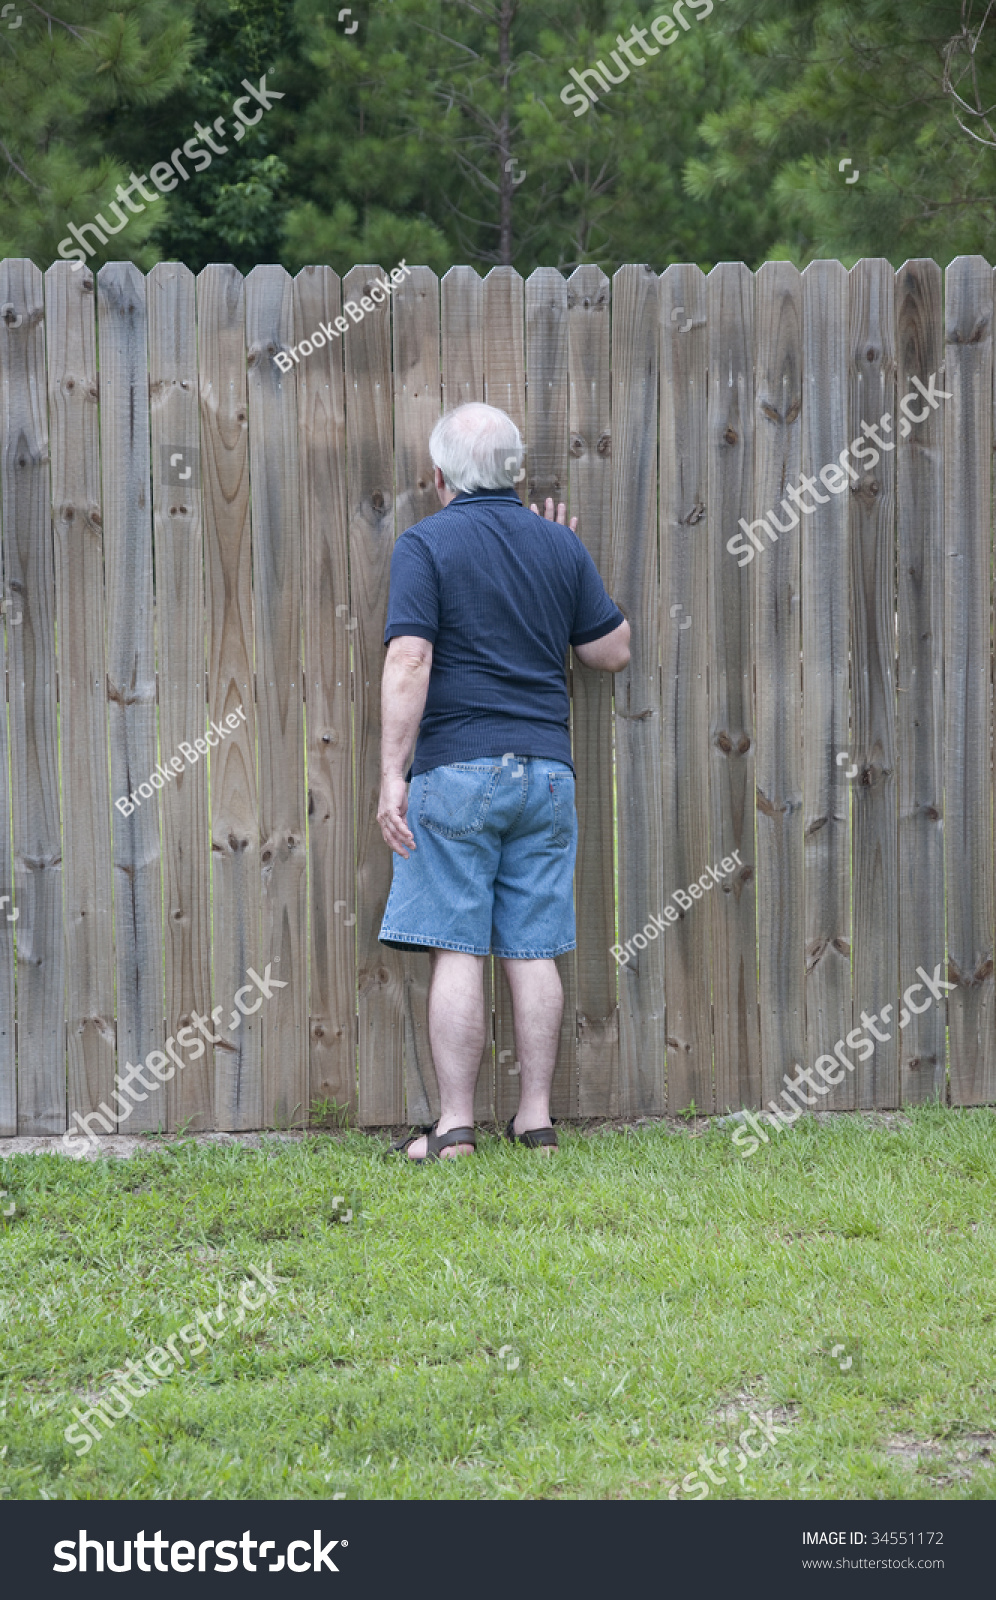 Подглядывание за бабушкой. Человек у забора. Прикольный забор. Человек заглядывает за забор.